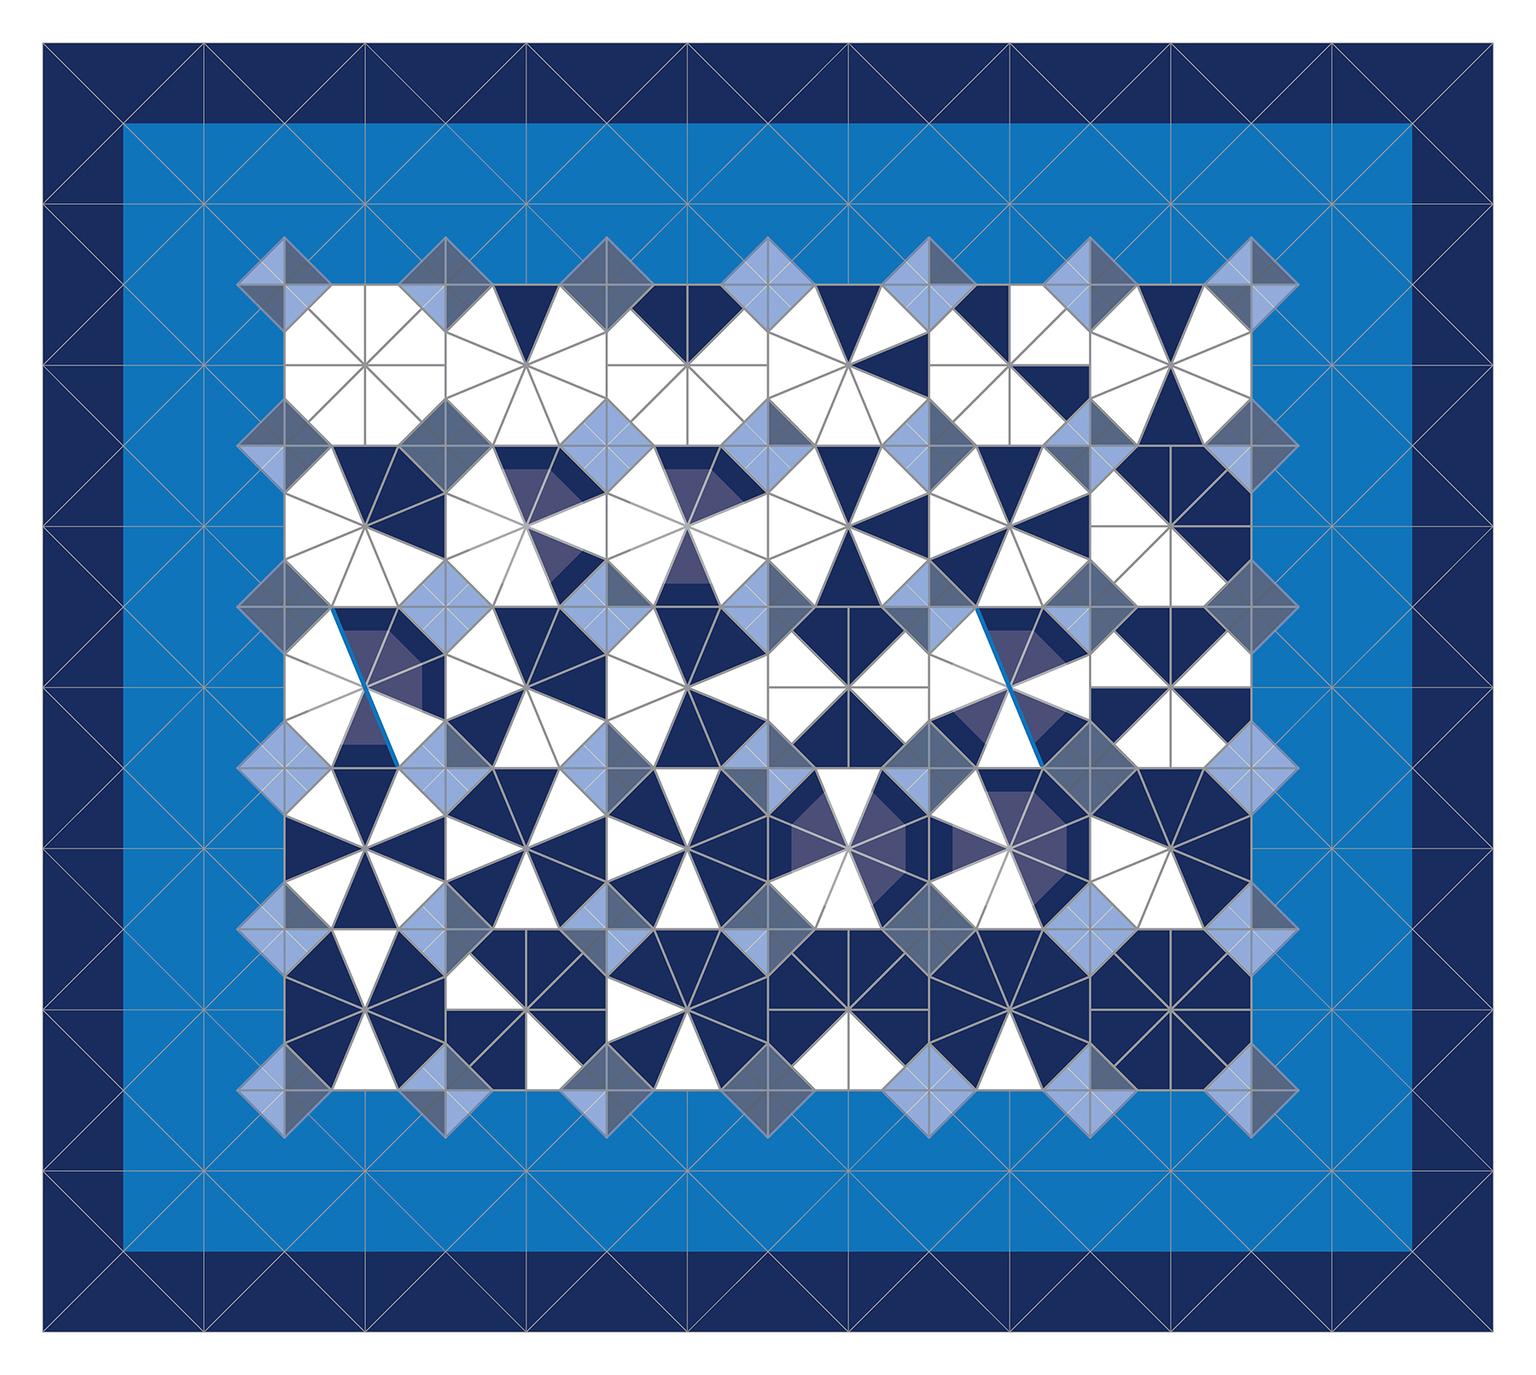 Image for entry 'Octet: Variations in Blue'